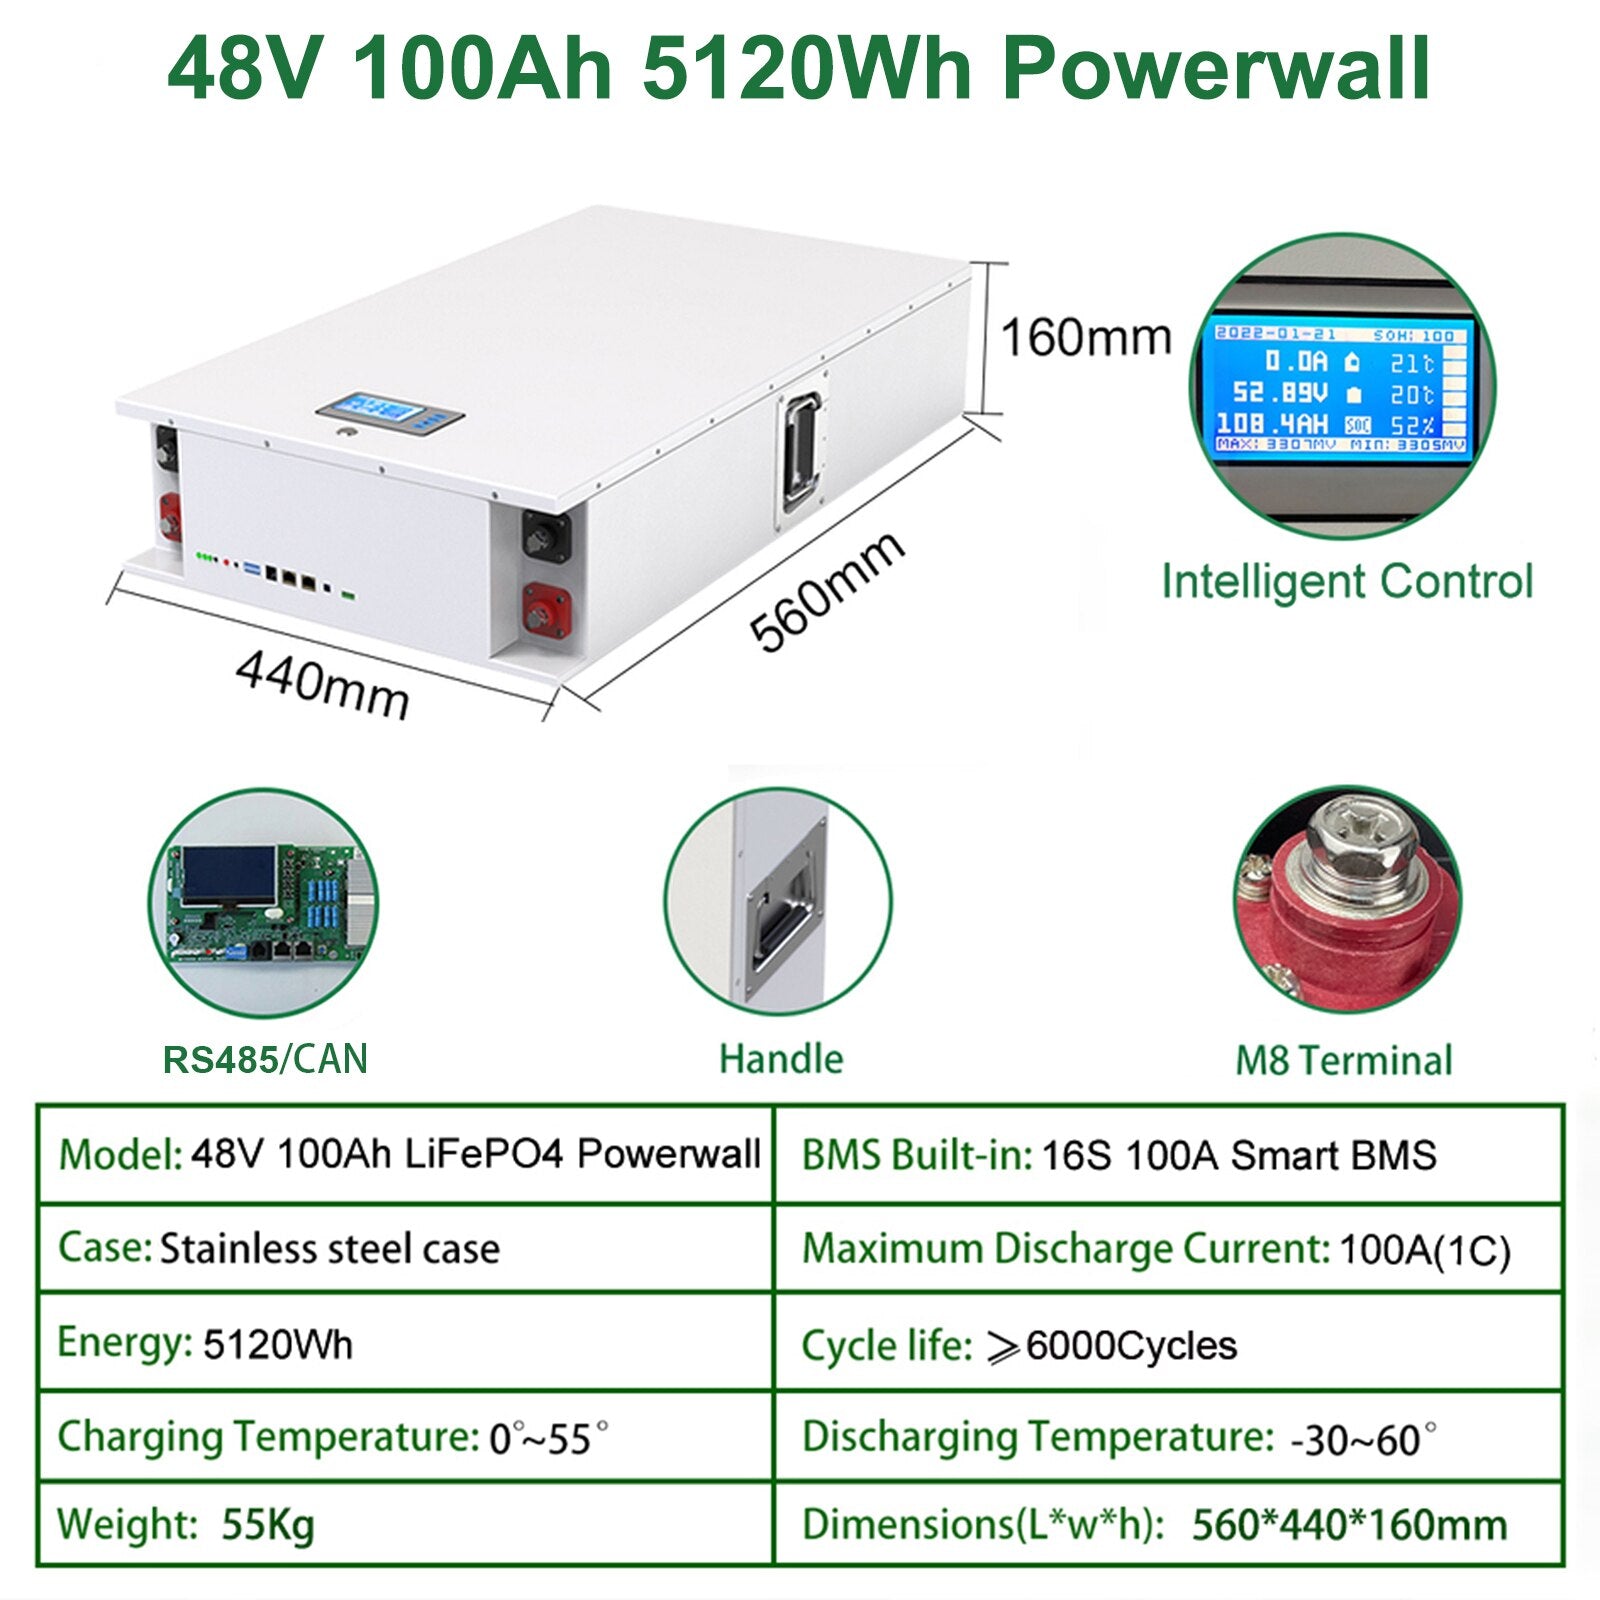 48V 1OOAh 5120Wh Powerwall 160mm